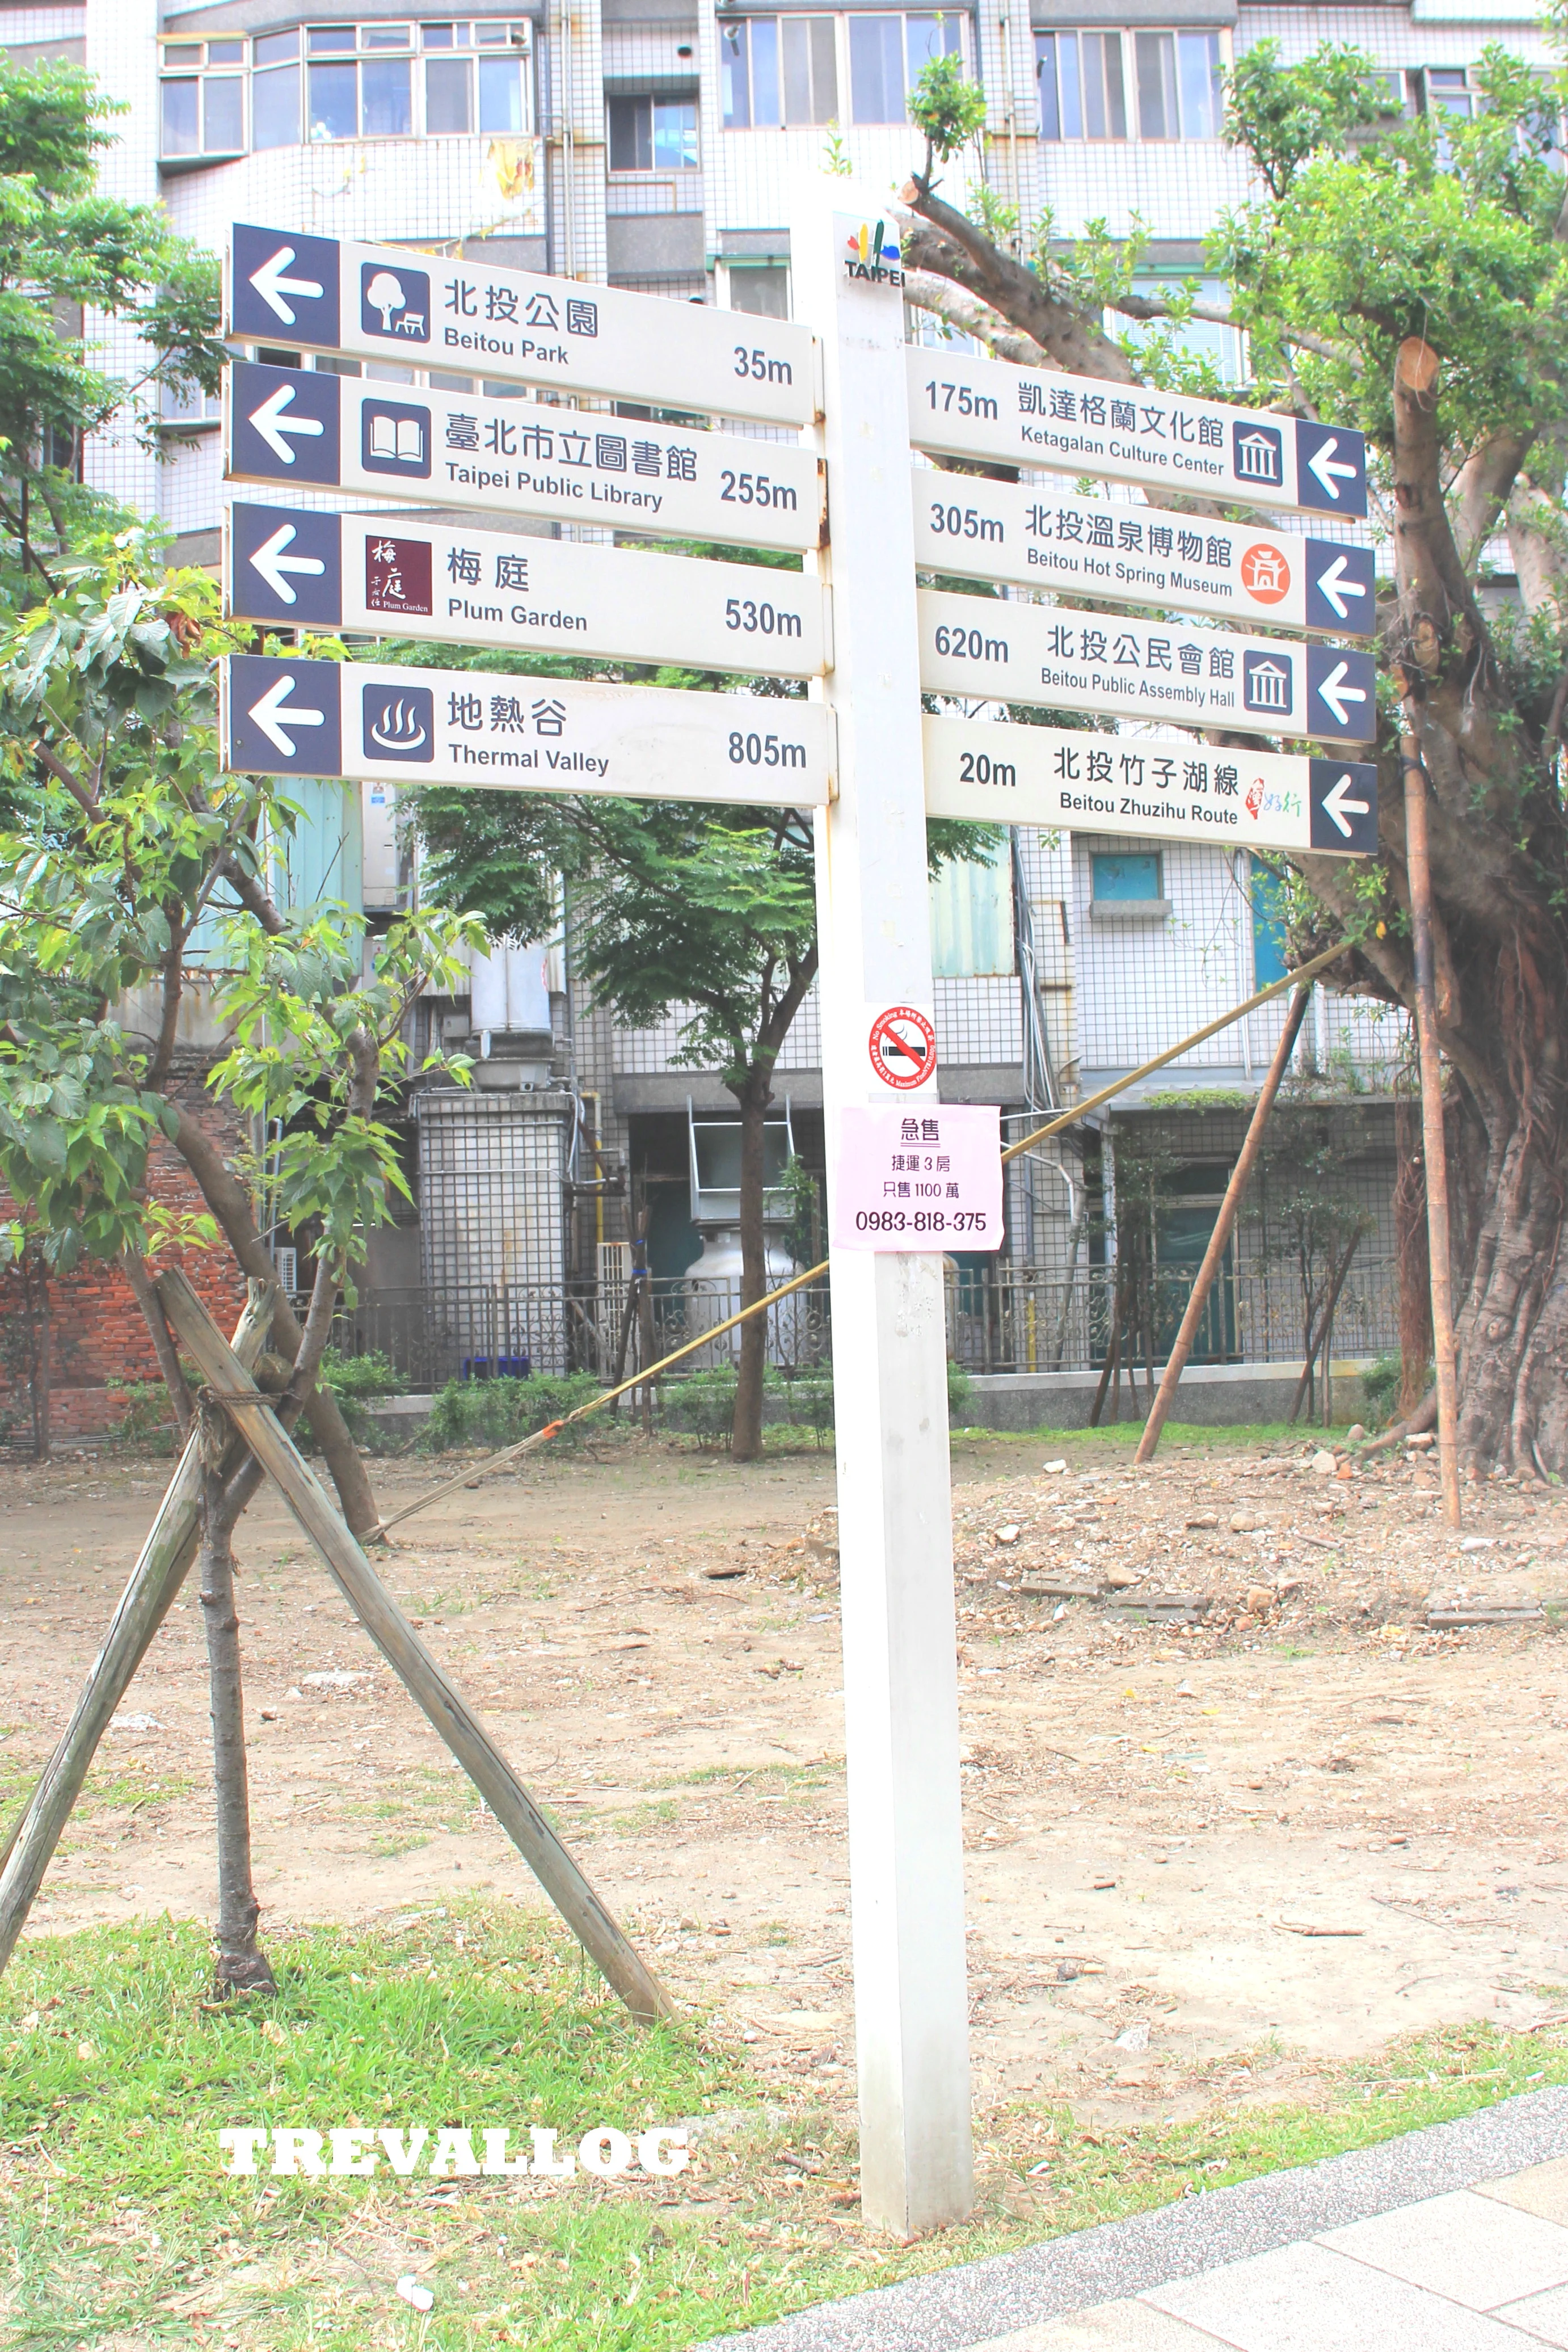 Signage at xinbeitou area, Taipei, Taiwan